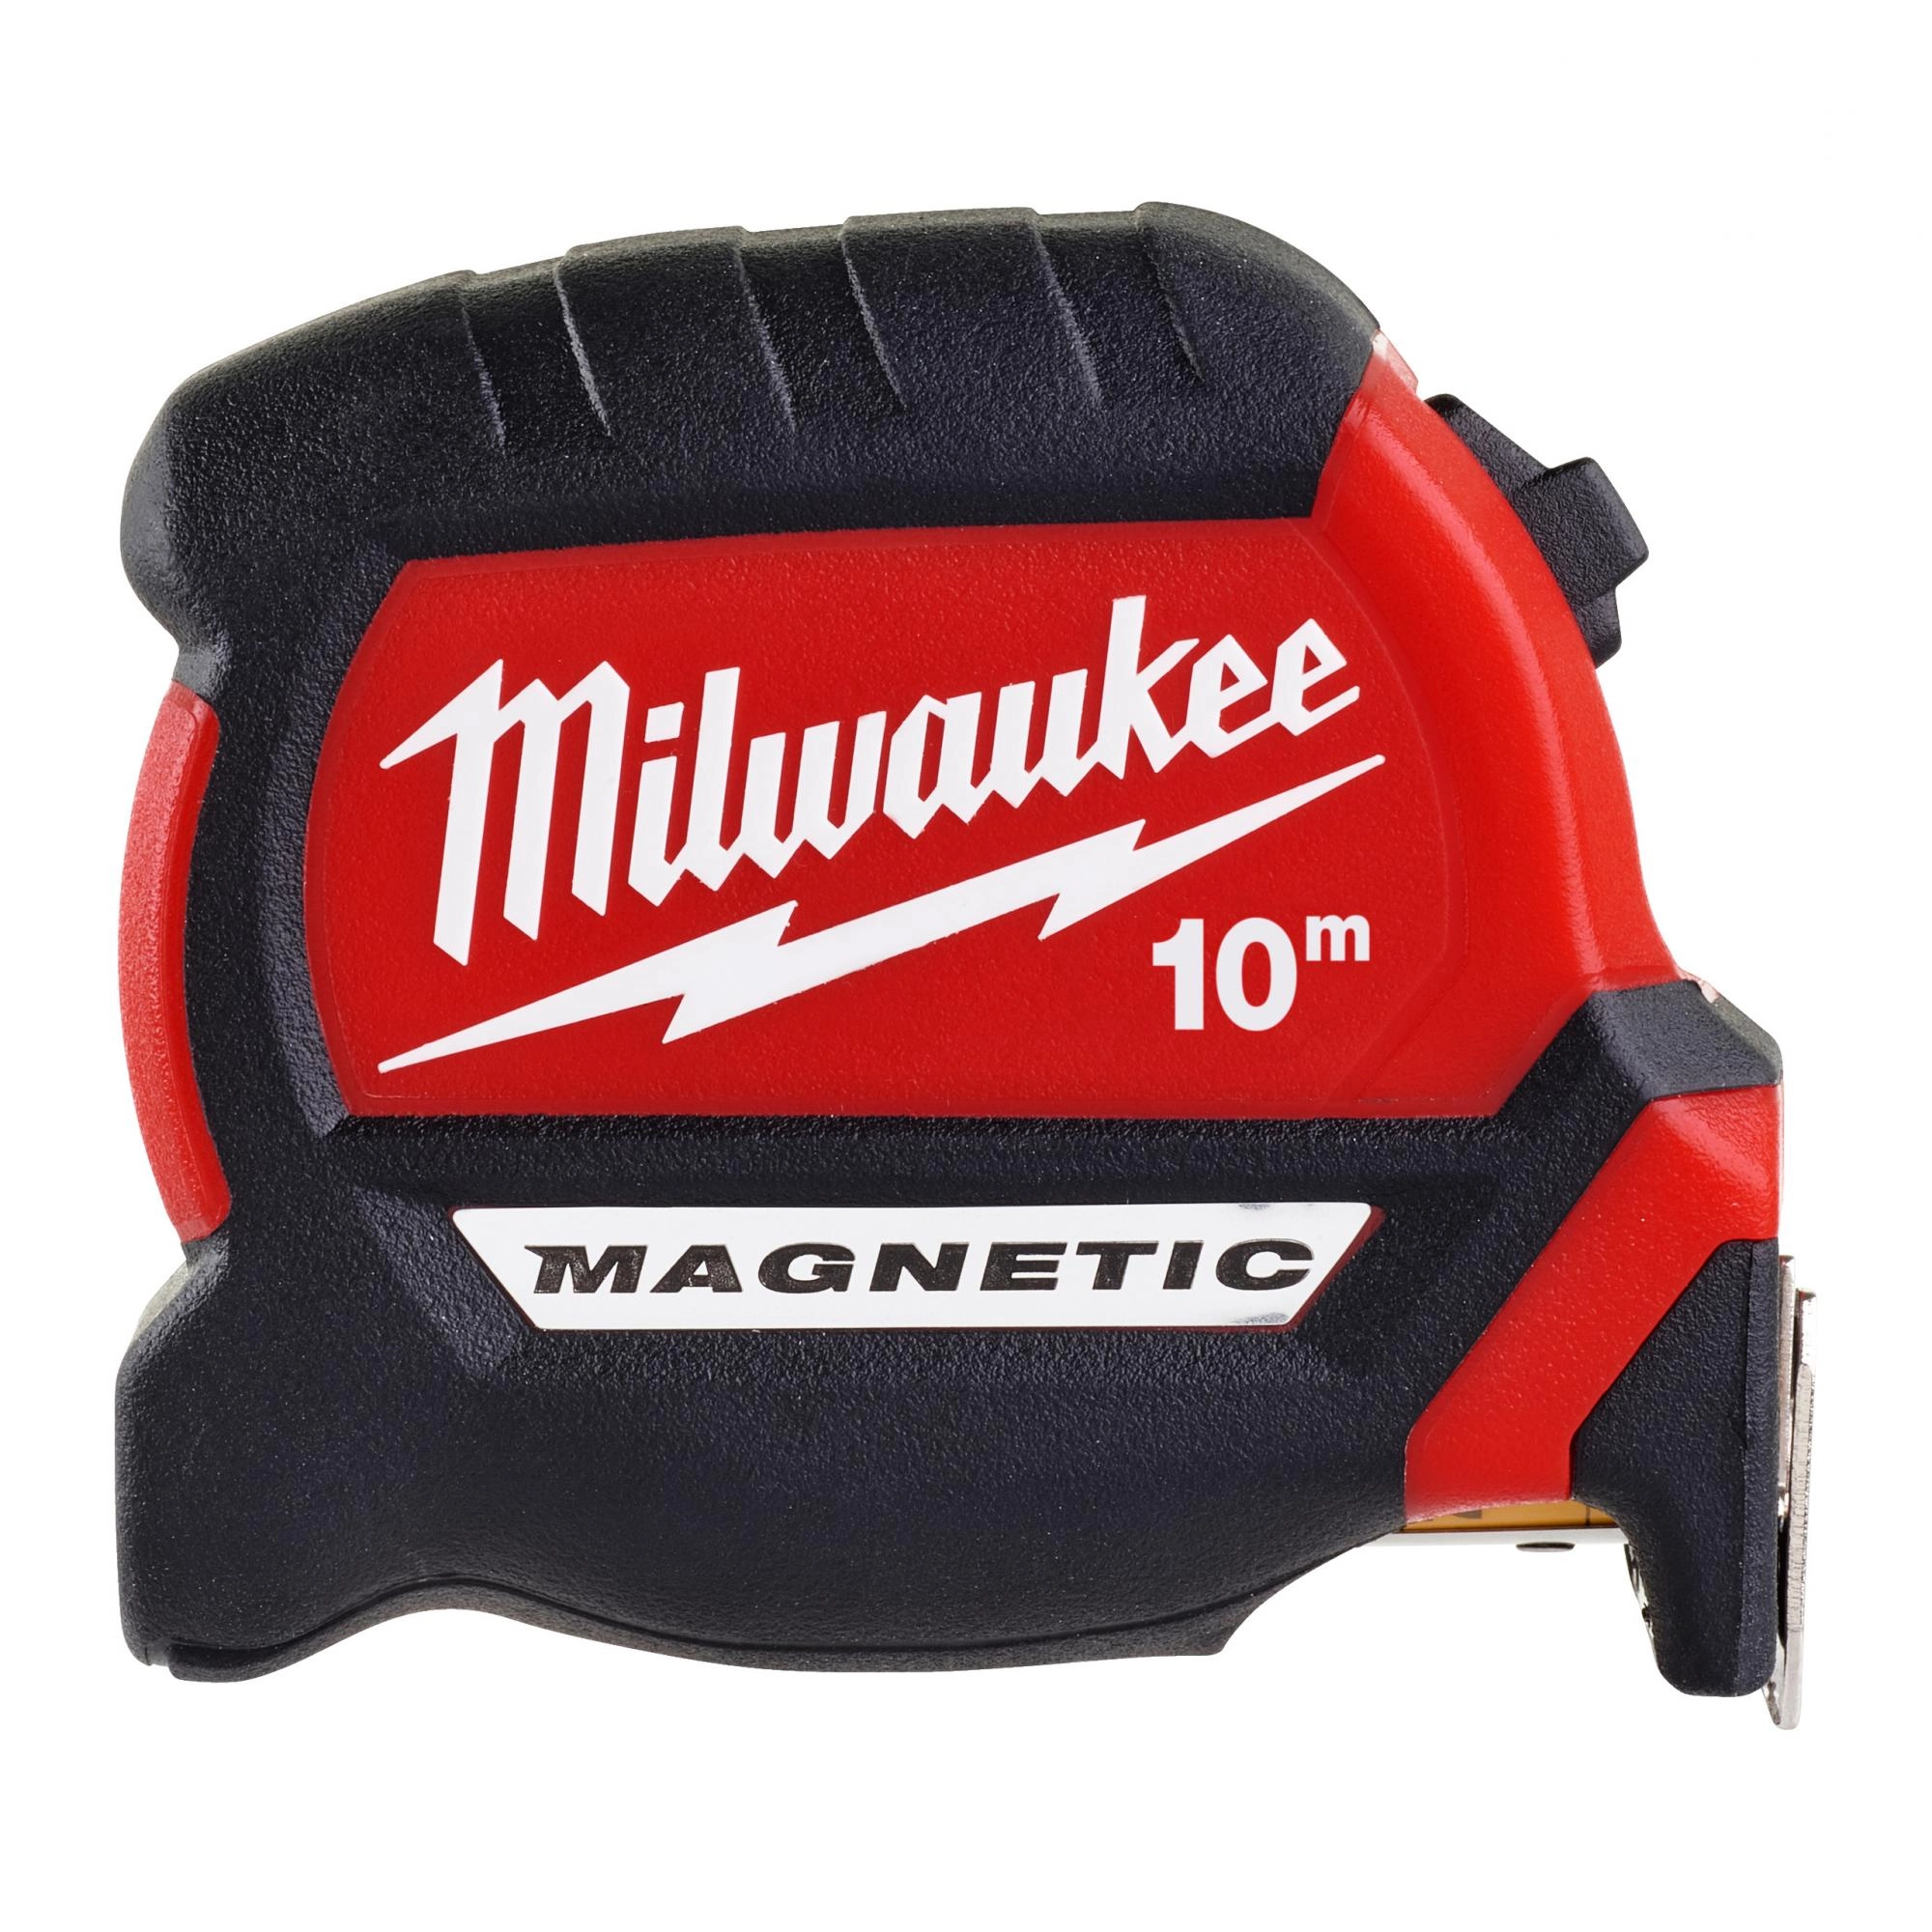 MILWAUKEE Magnetic Tape 10 м Рулетка